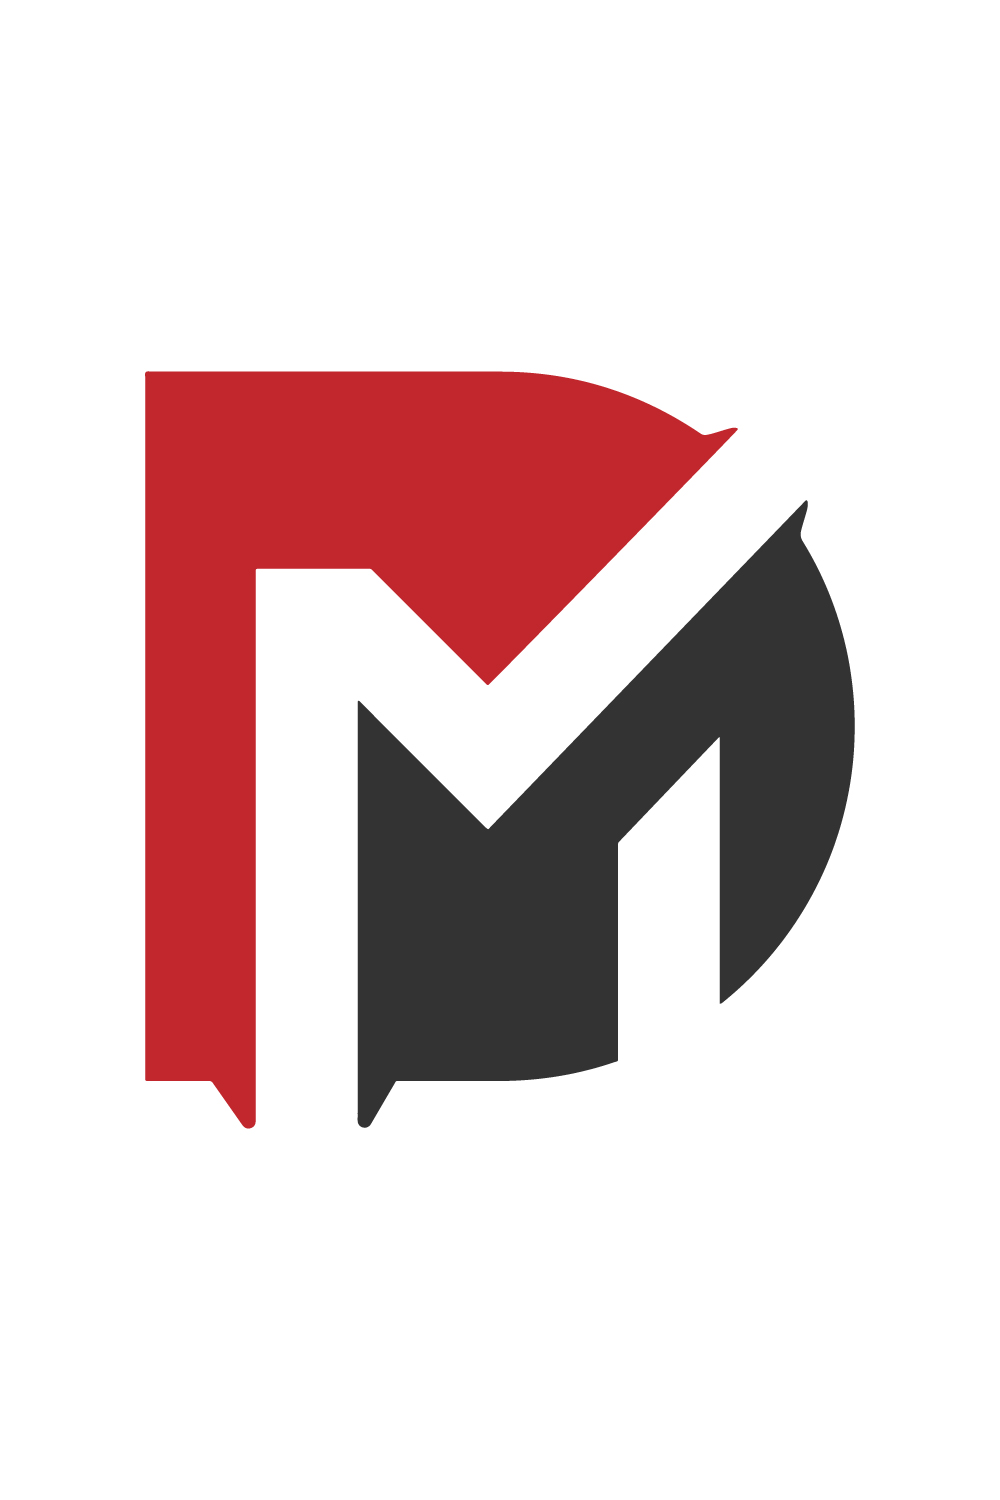 DM logo Design pinterest preview image.